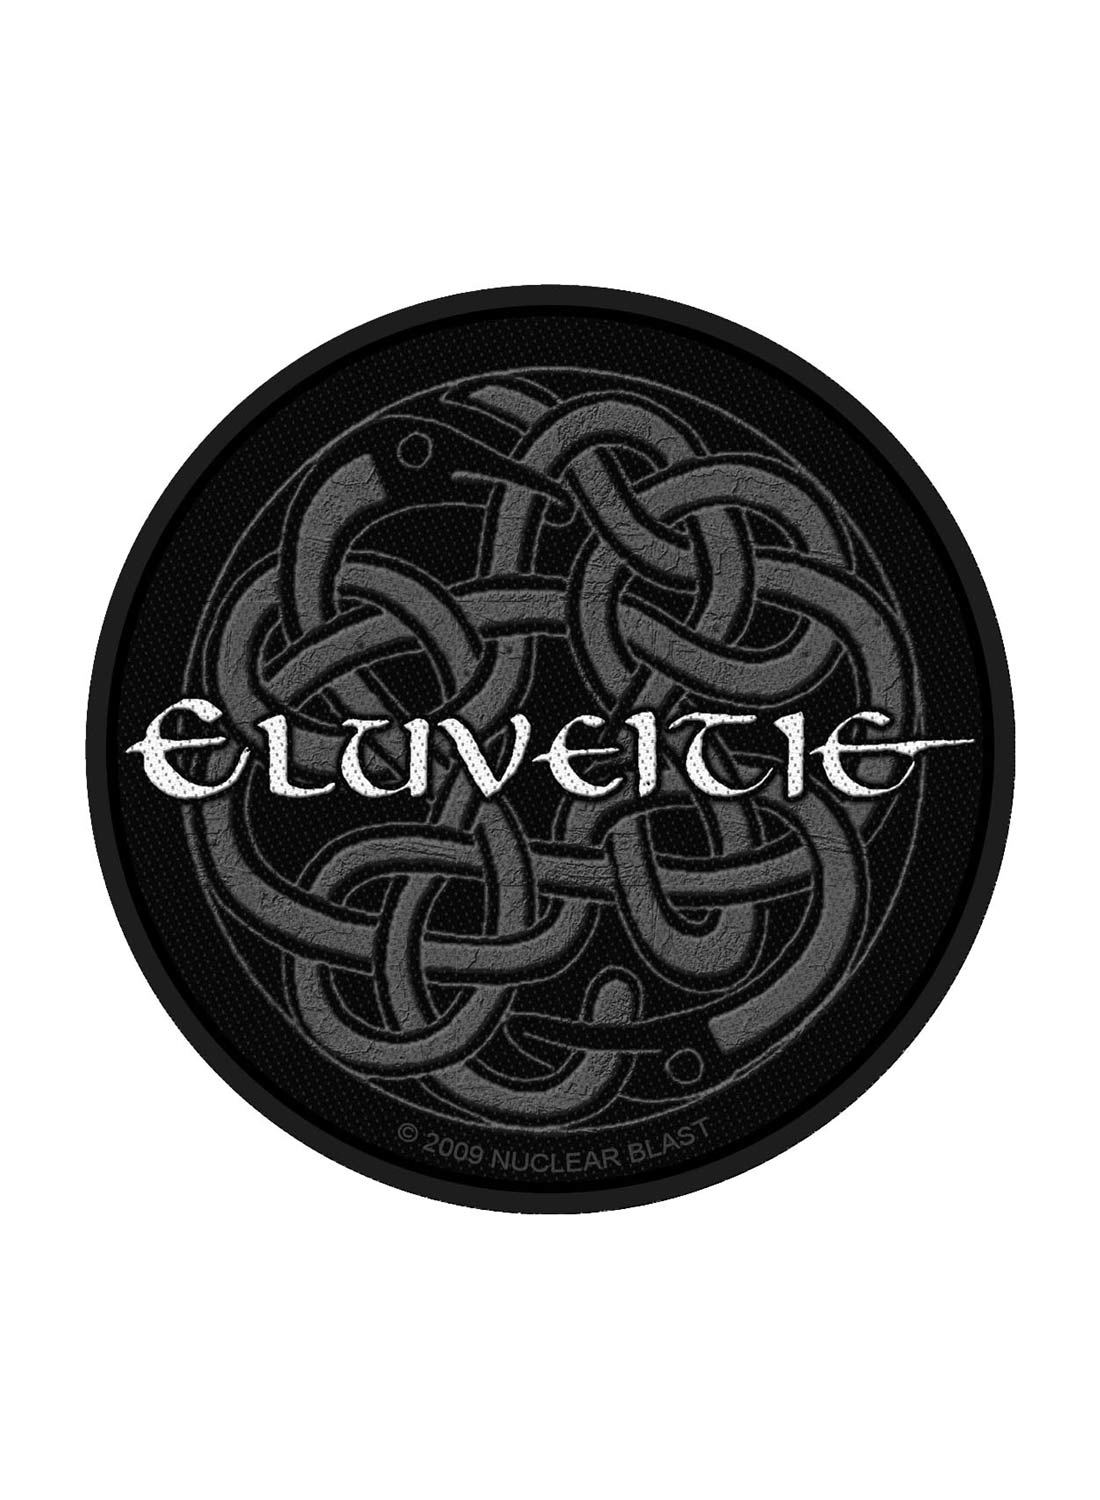 Eluveitie Celtic Knot Patch